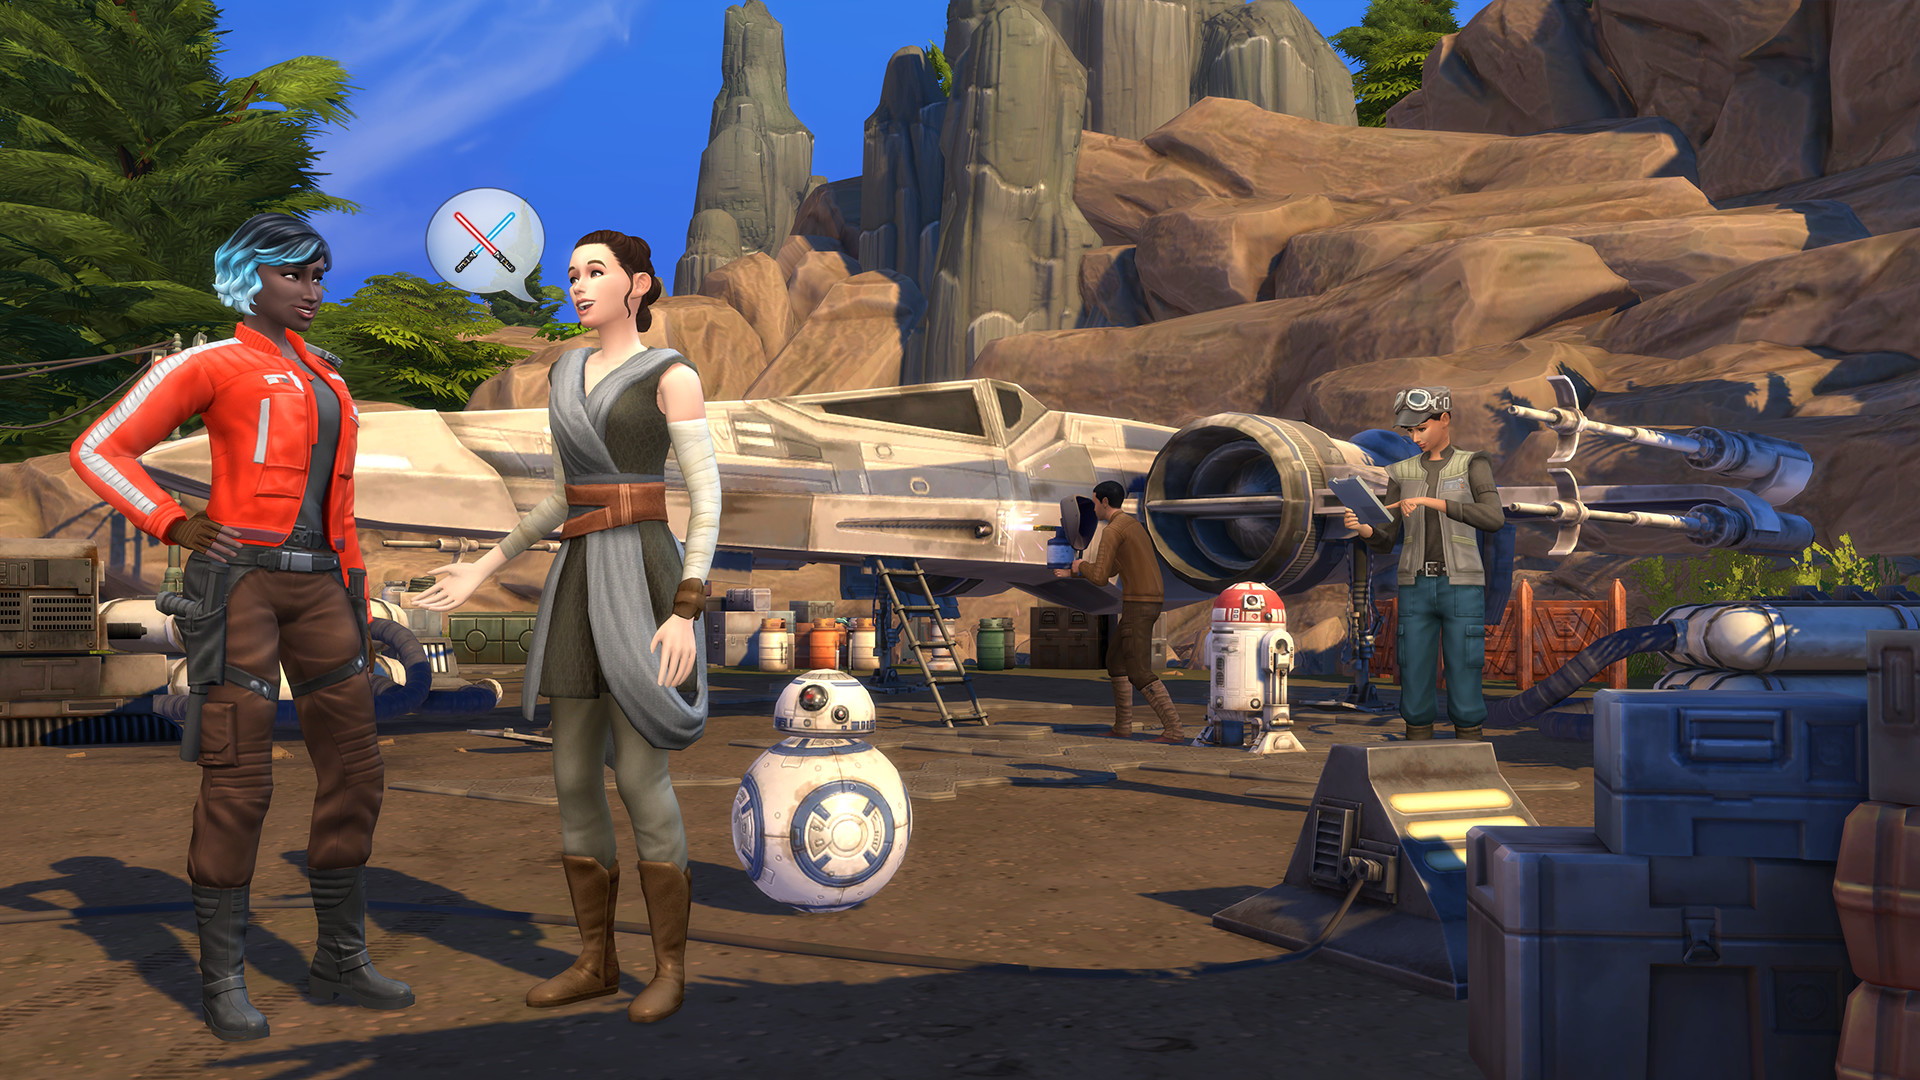 The Sims 4 Star Wars: Journey to Batuu - screenshot 3